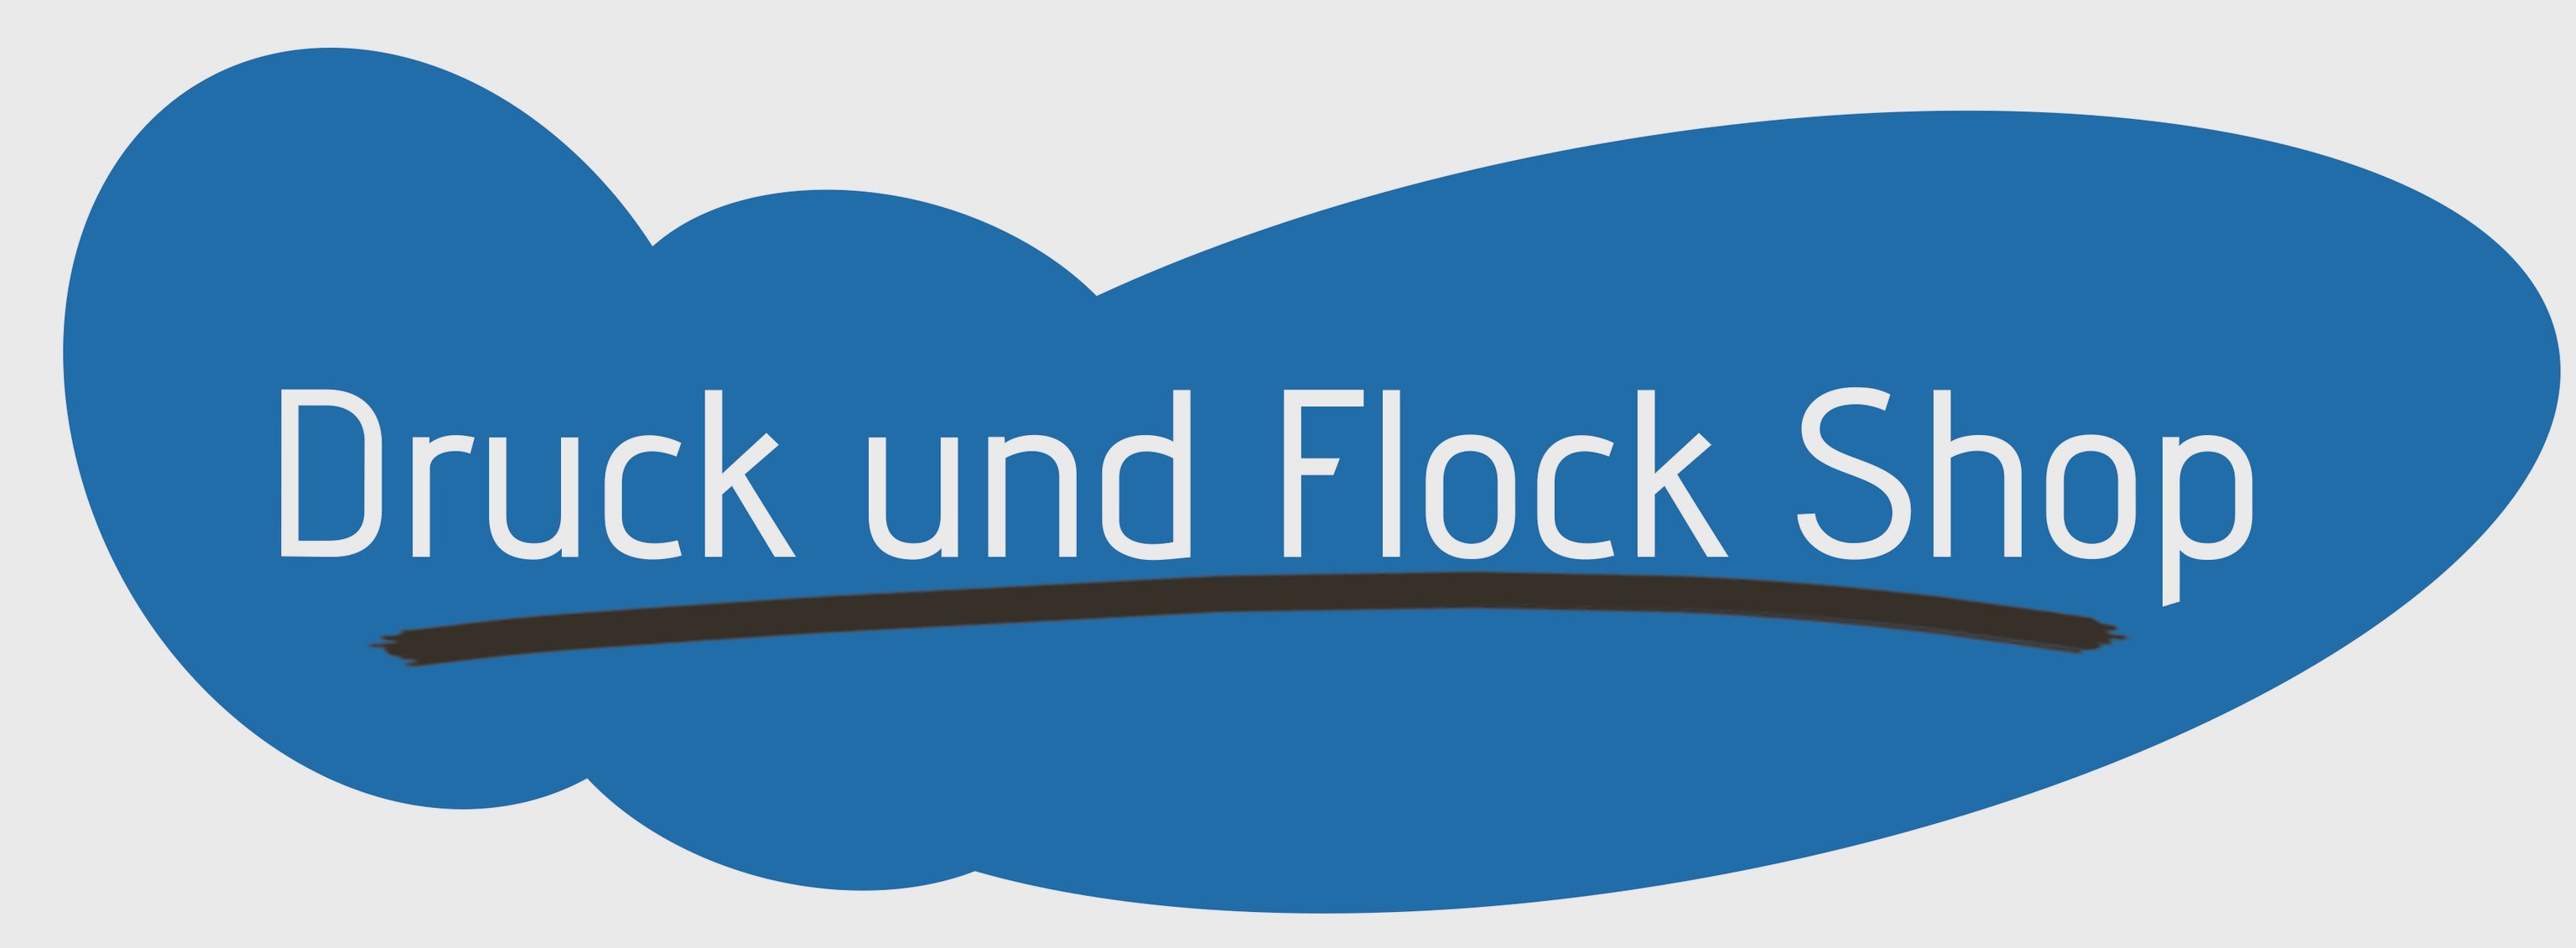 Druck & Flock Shop